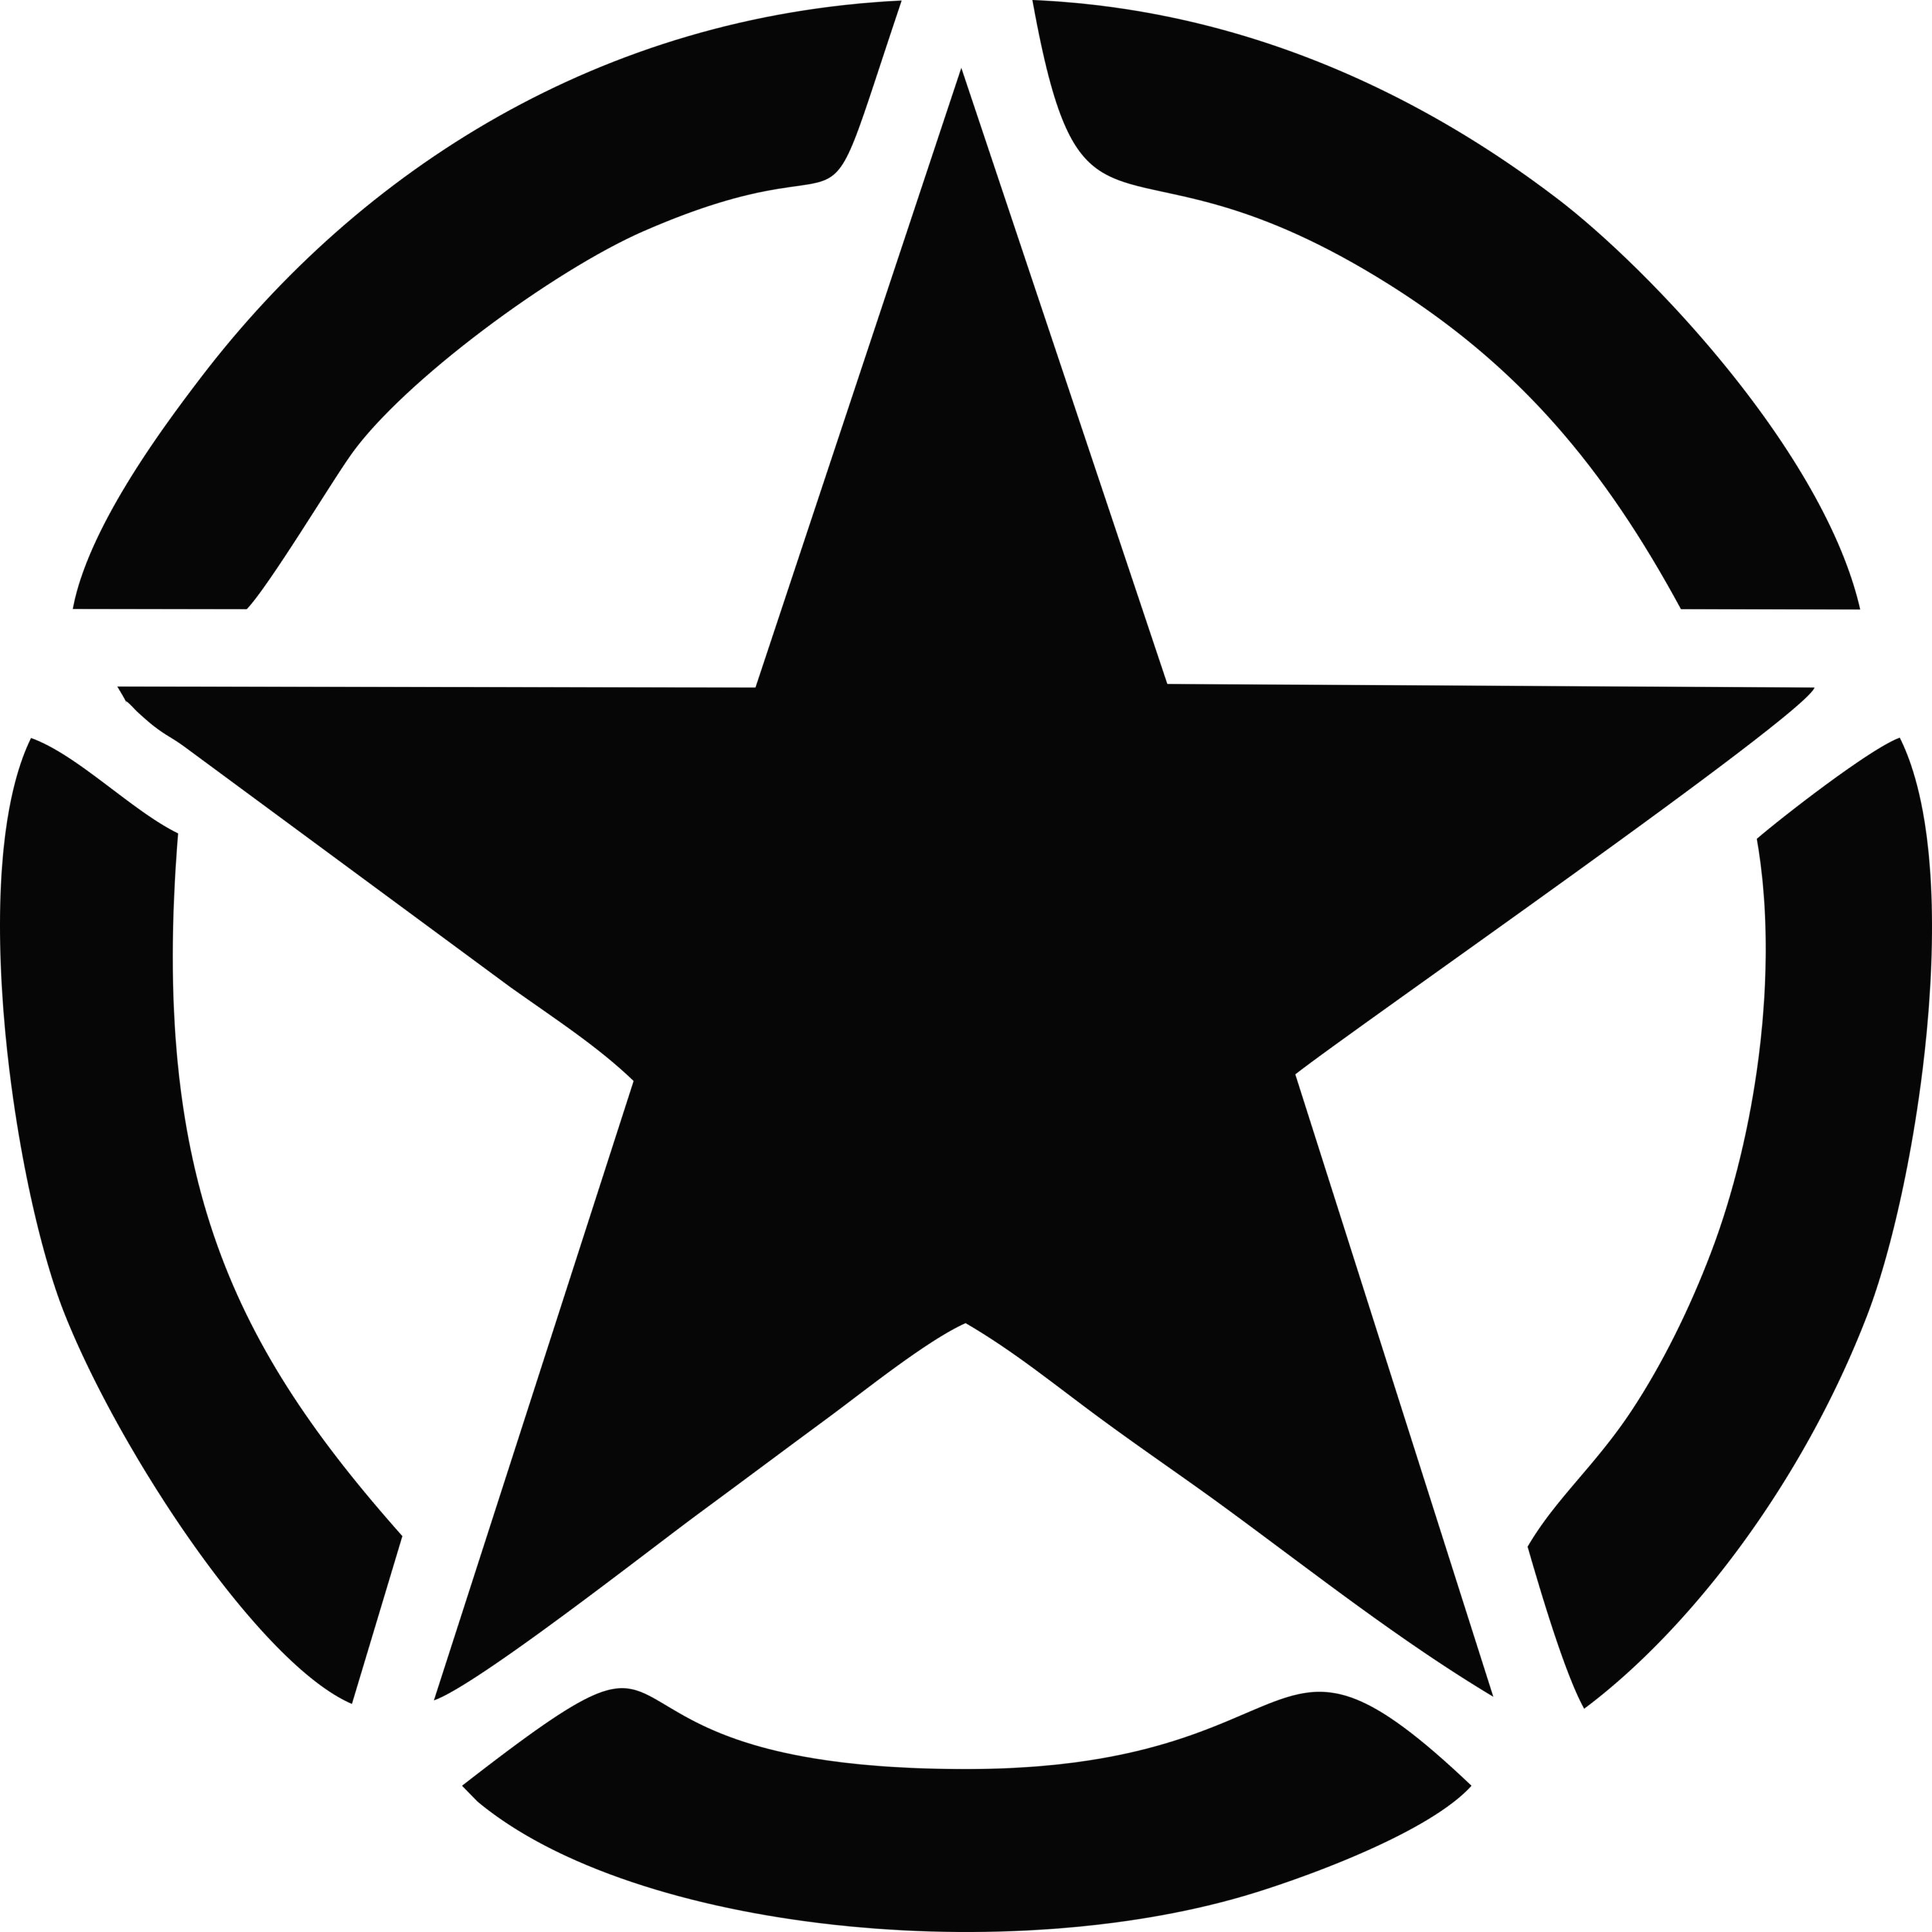 WOLF Star Logo